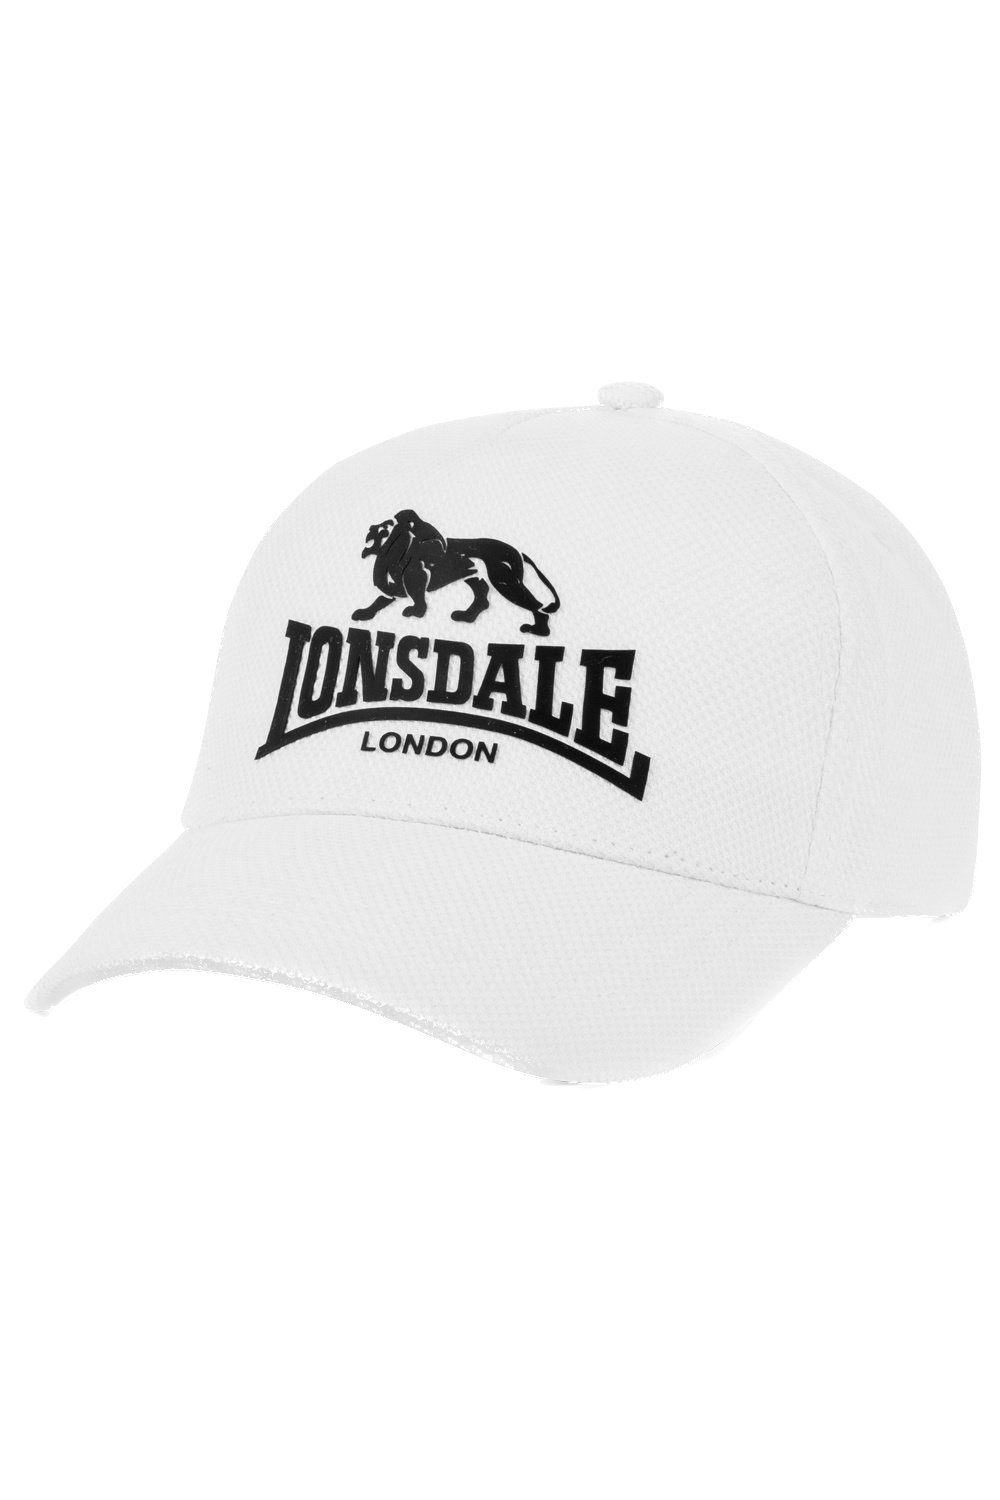 Lonsdale Baseball Cap BECKBURY Lonsdale Unisex white/black Cap